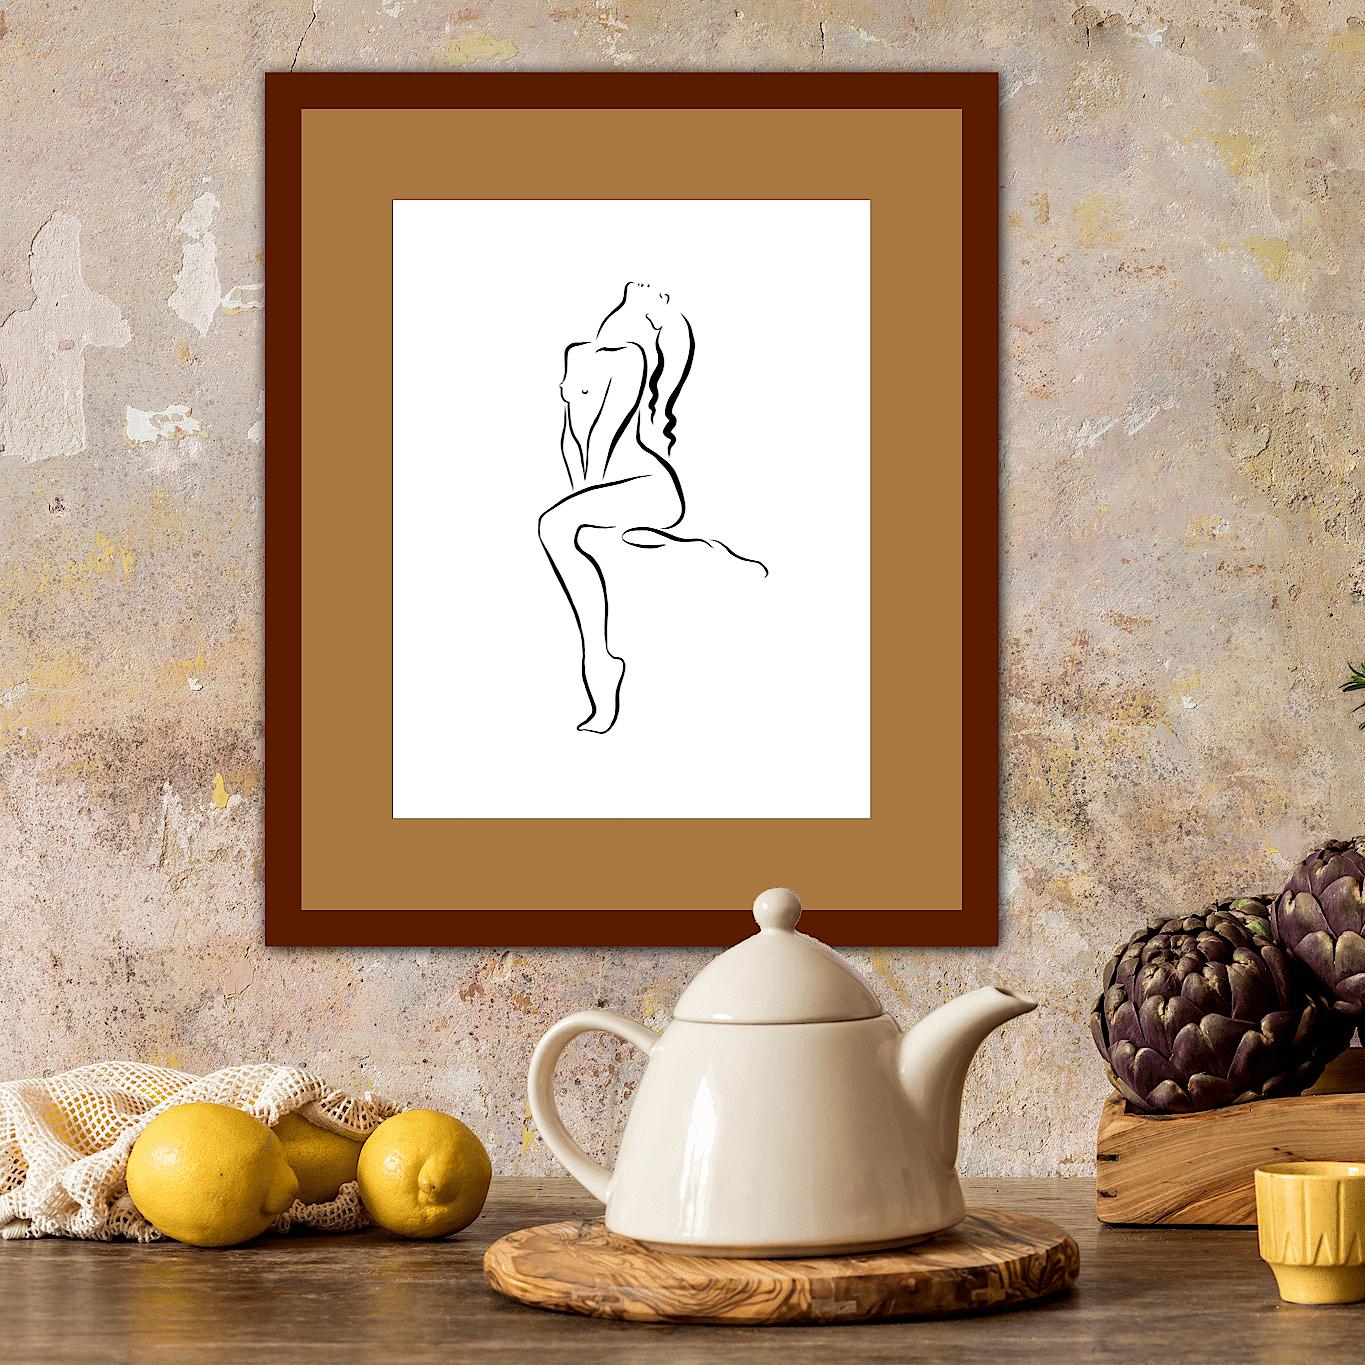 Haiku #31 - Digital Vector Drawing Sitting Female Nude Woman Figure Head Back - Contemporary Art by Michael Binkley